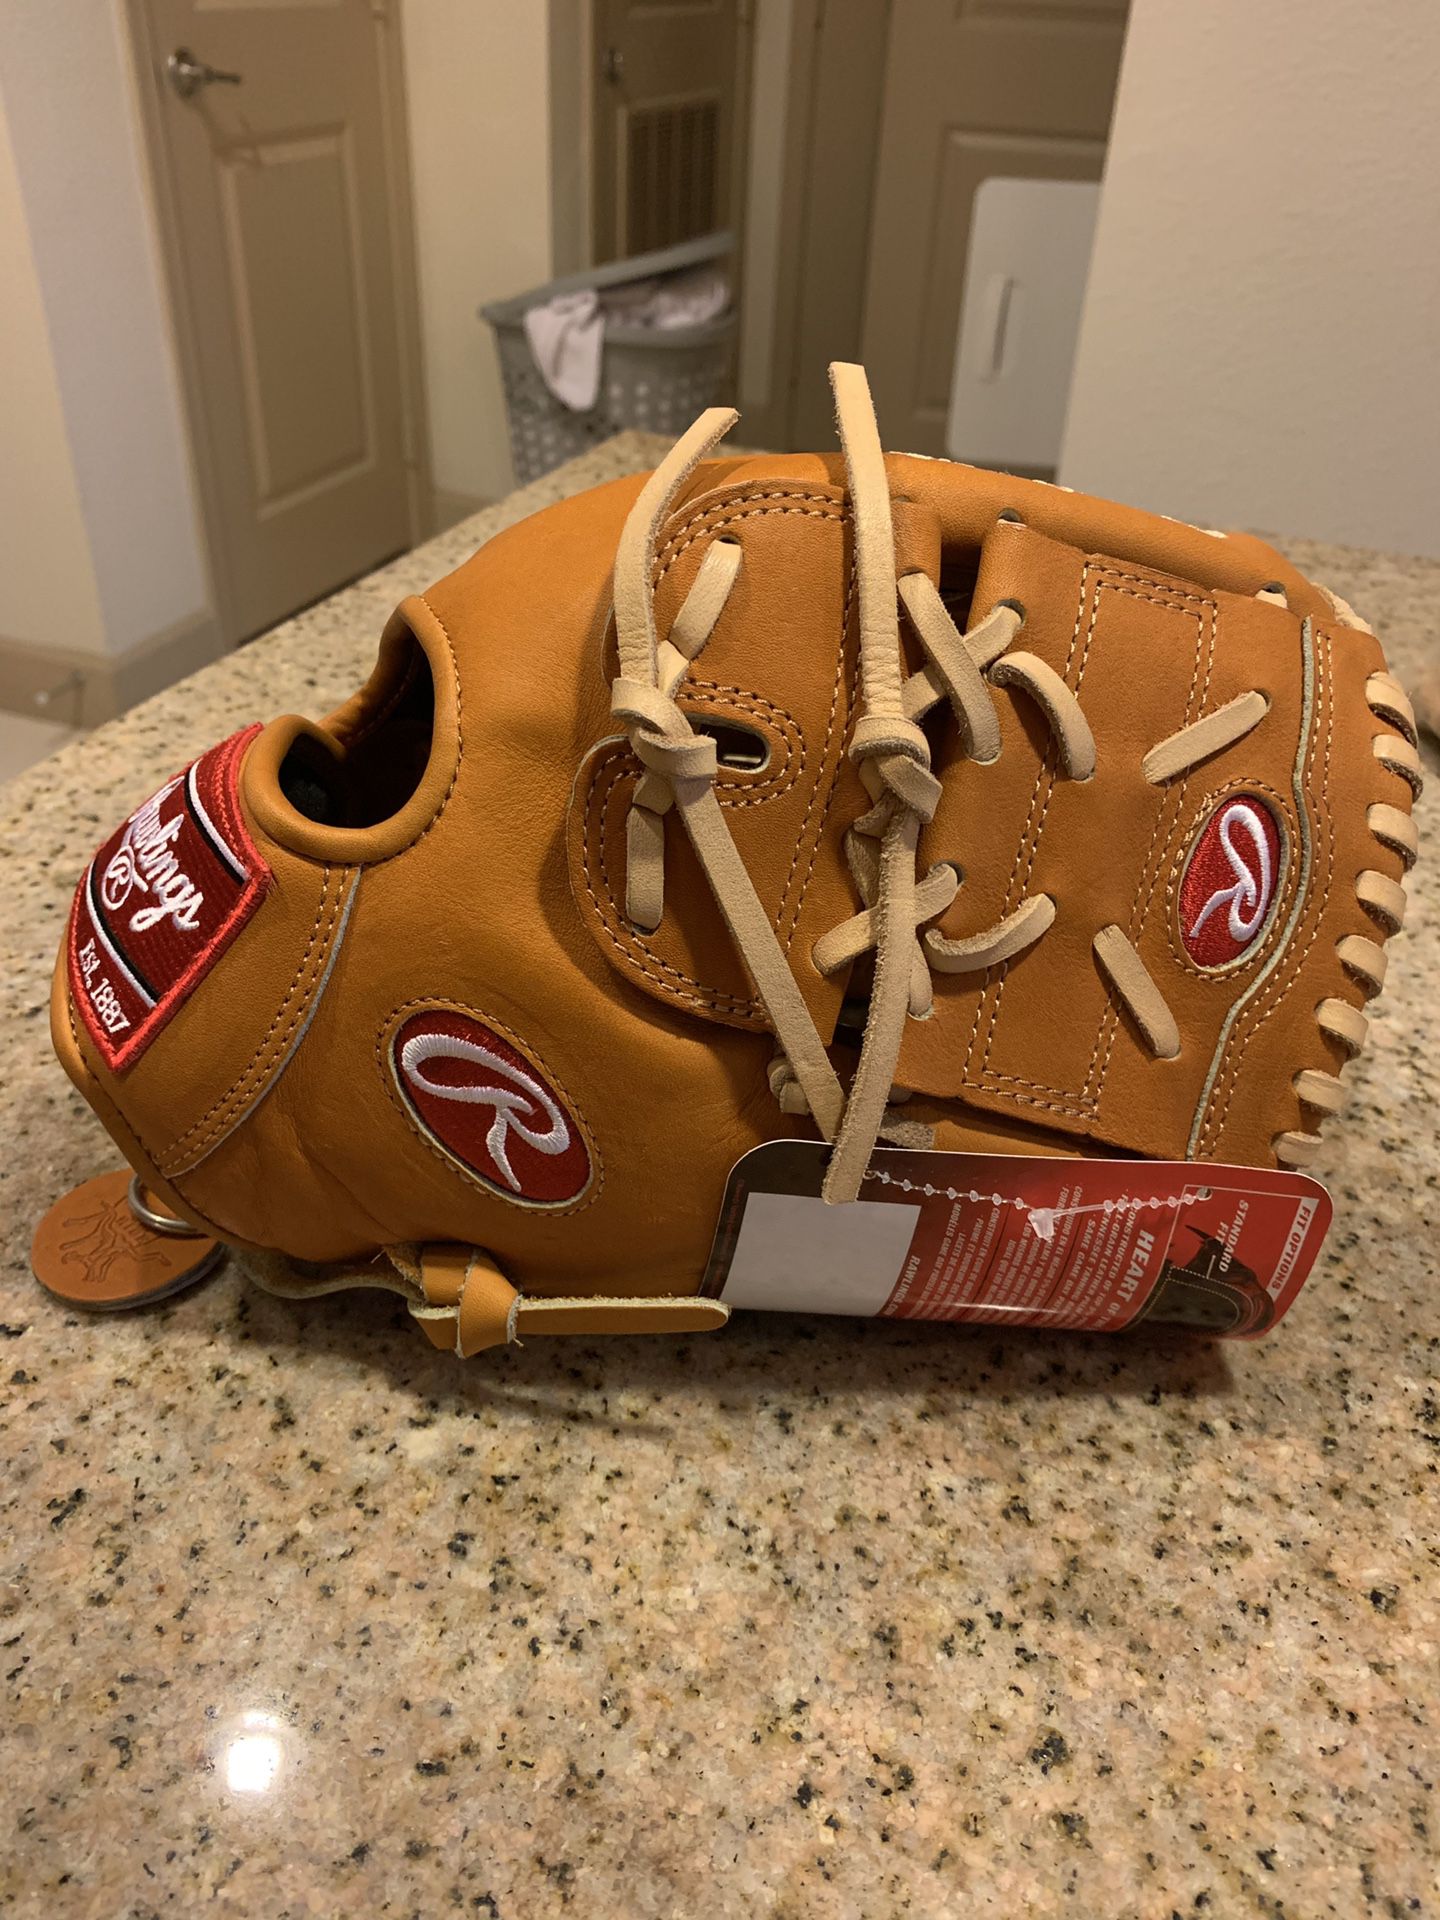 Rawlings 12” HOH pitching glove